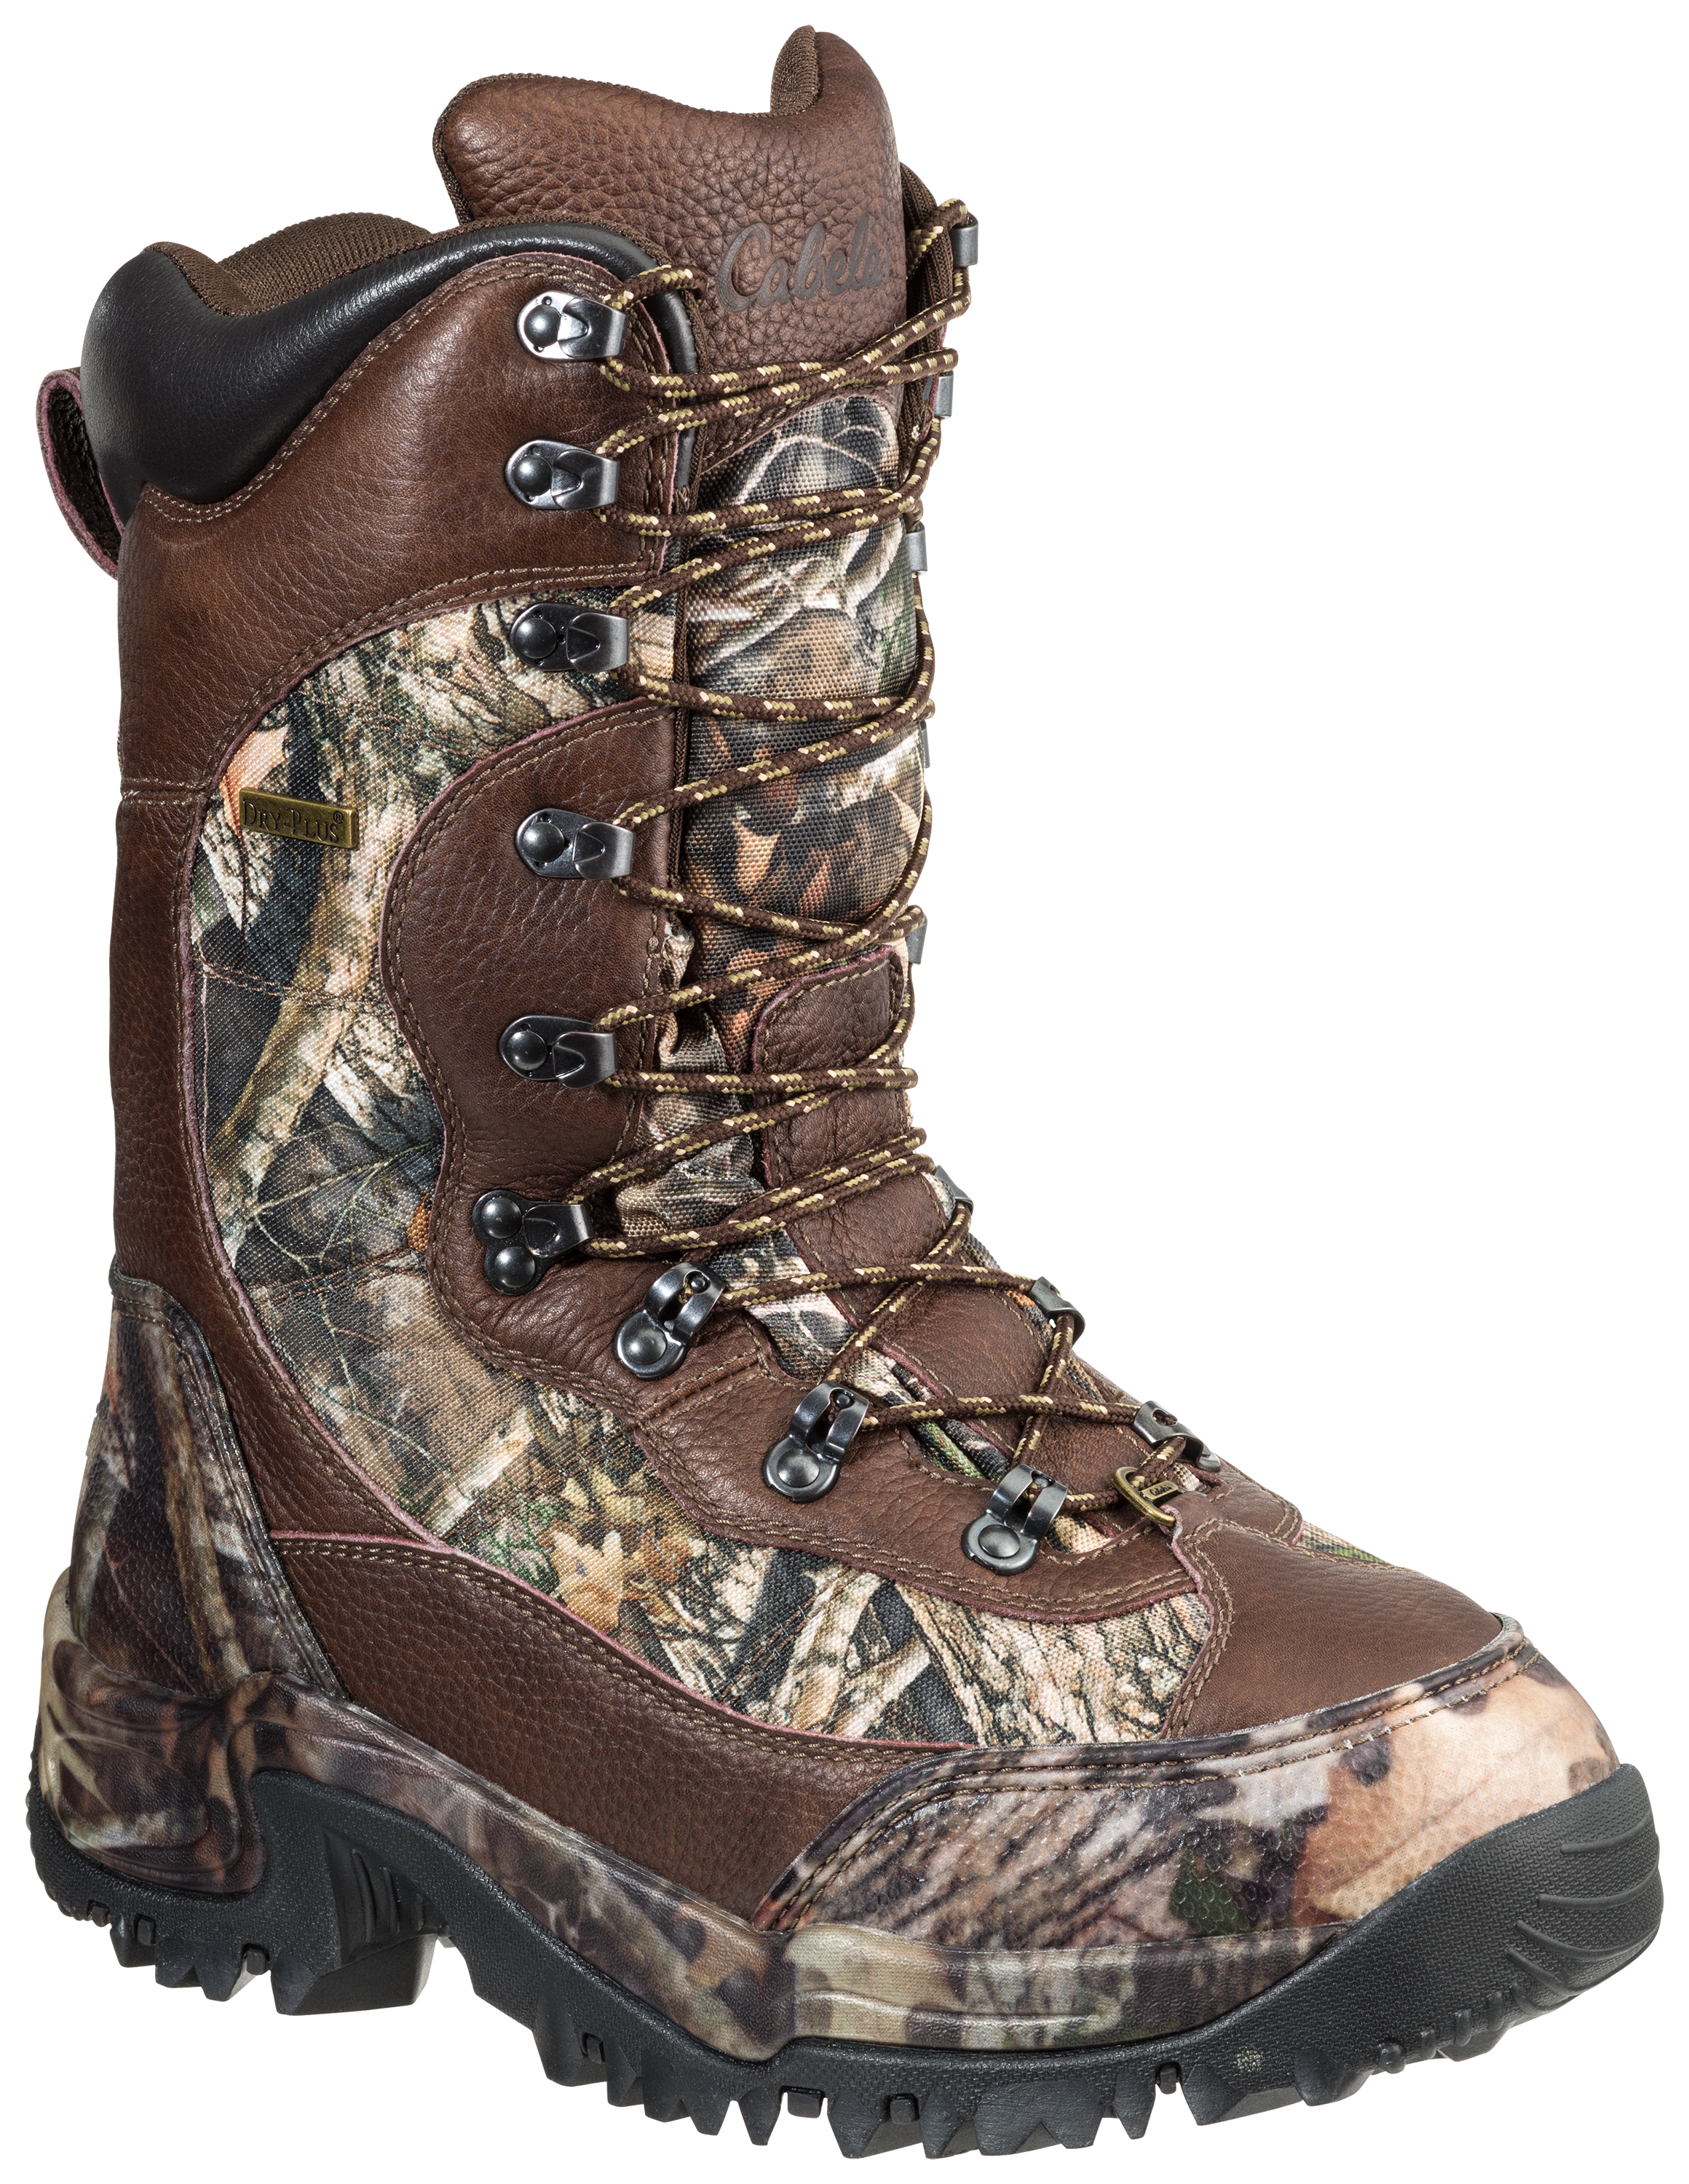 Cabela's Inferno Insulated Waterproof Hunting Boots for Men - Brown/TrueTimber Kanati - 8M